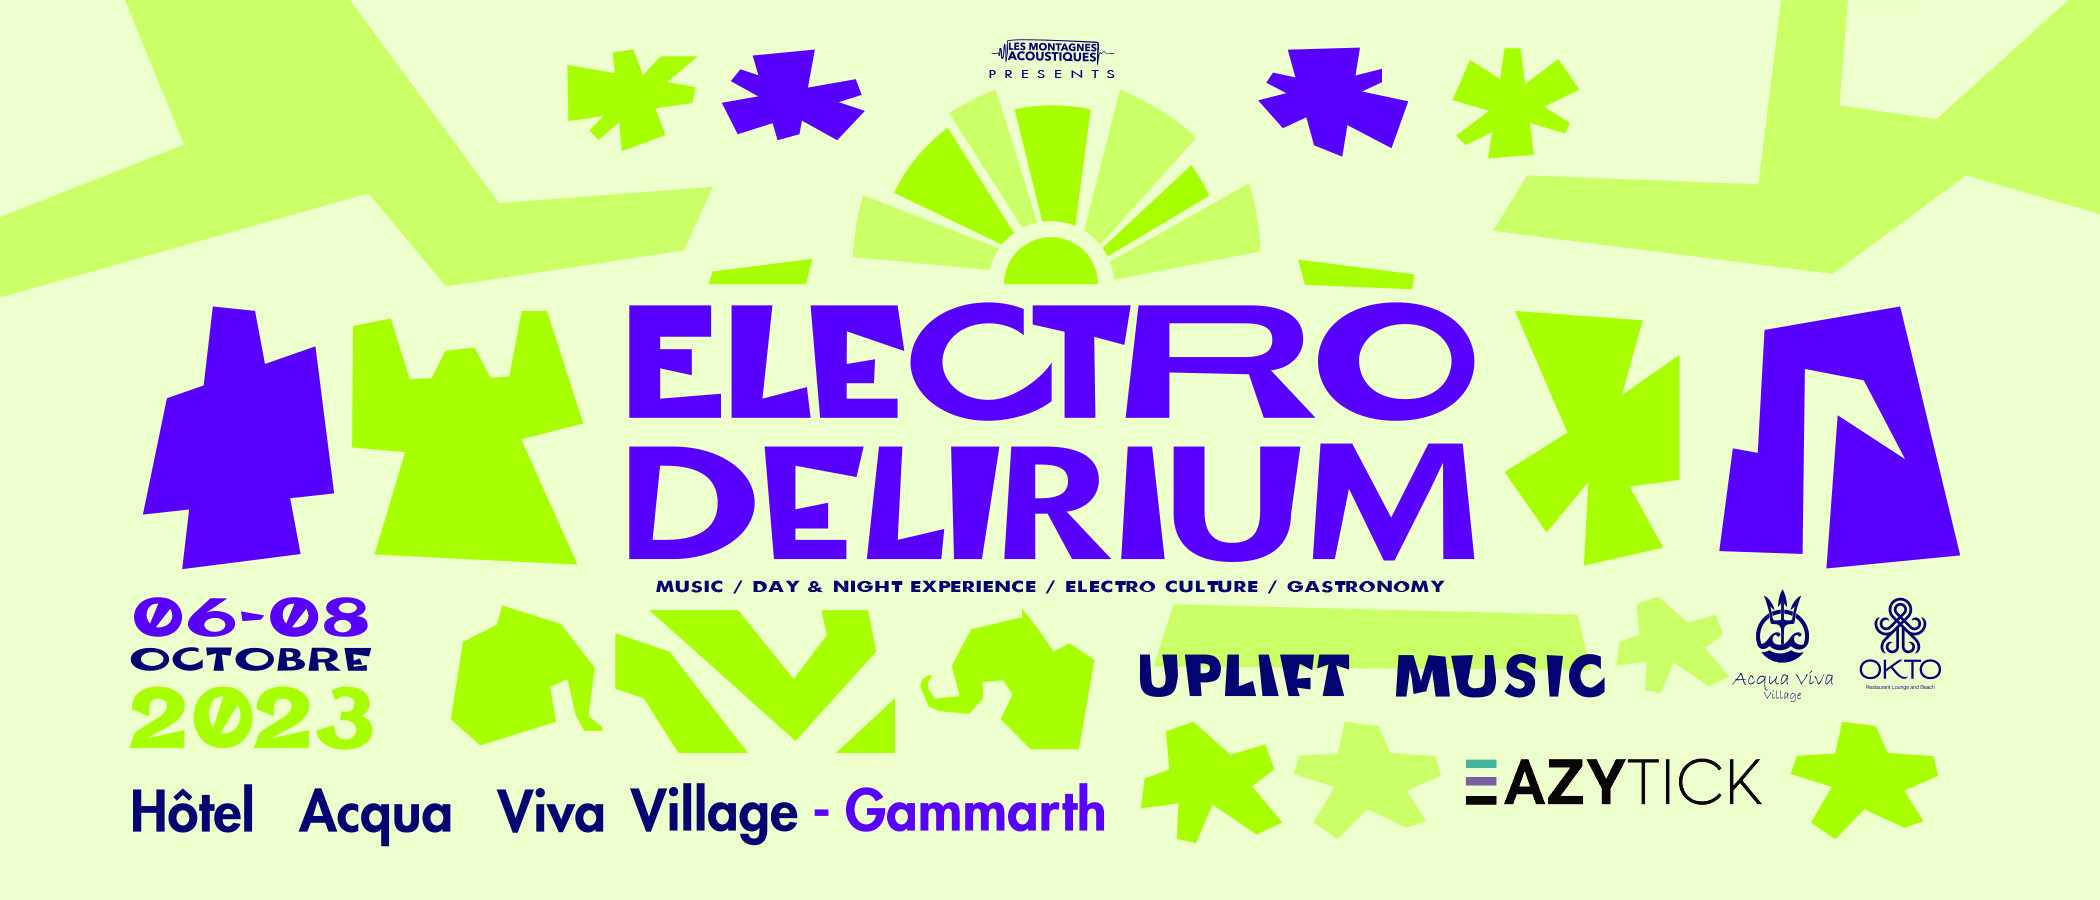 Electro Delirium